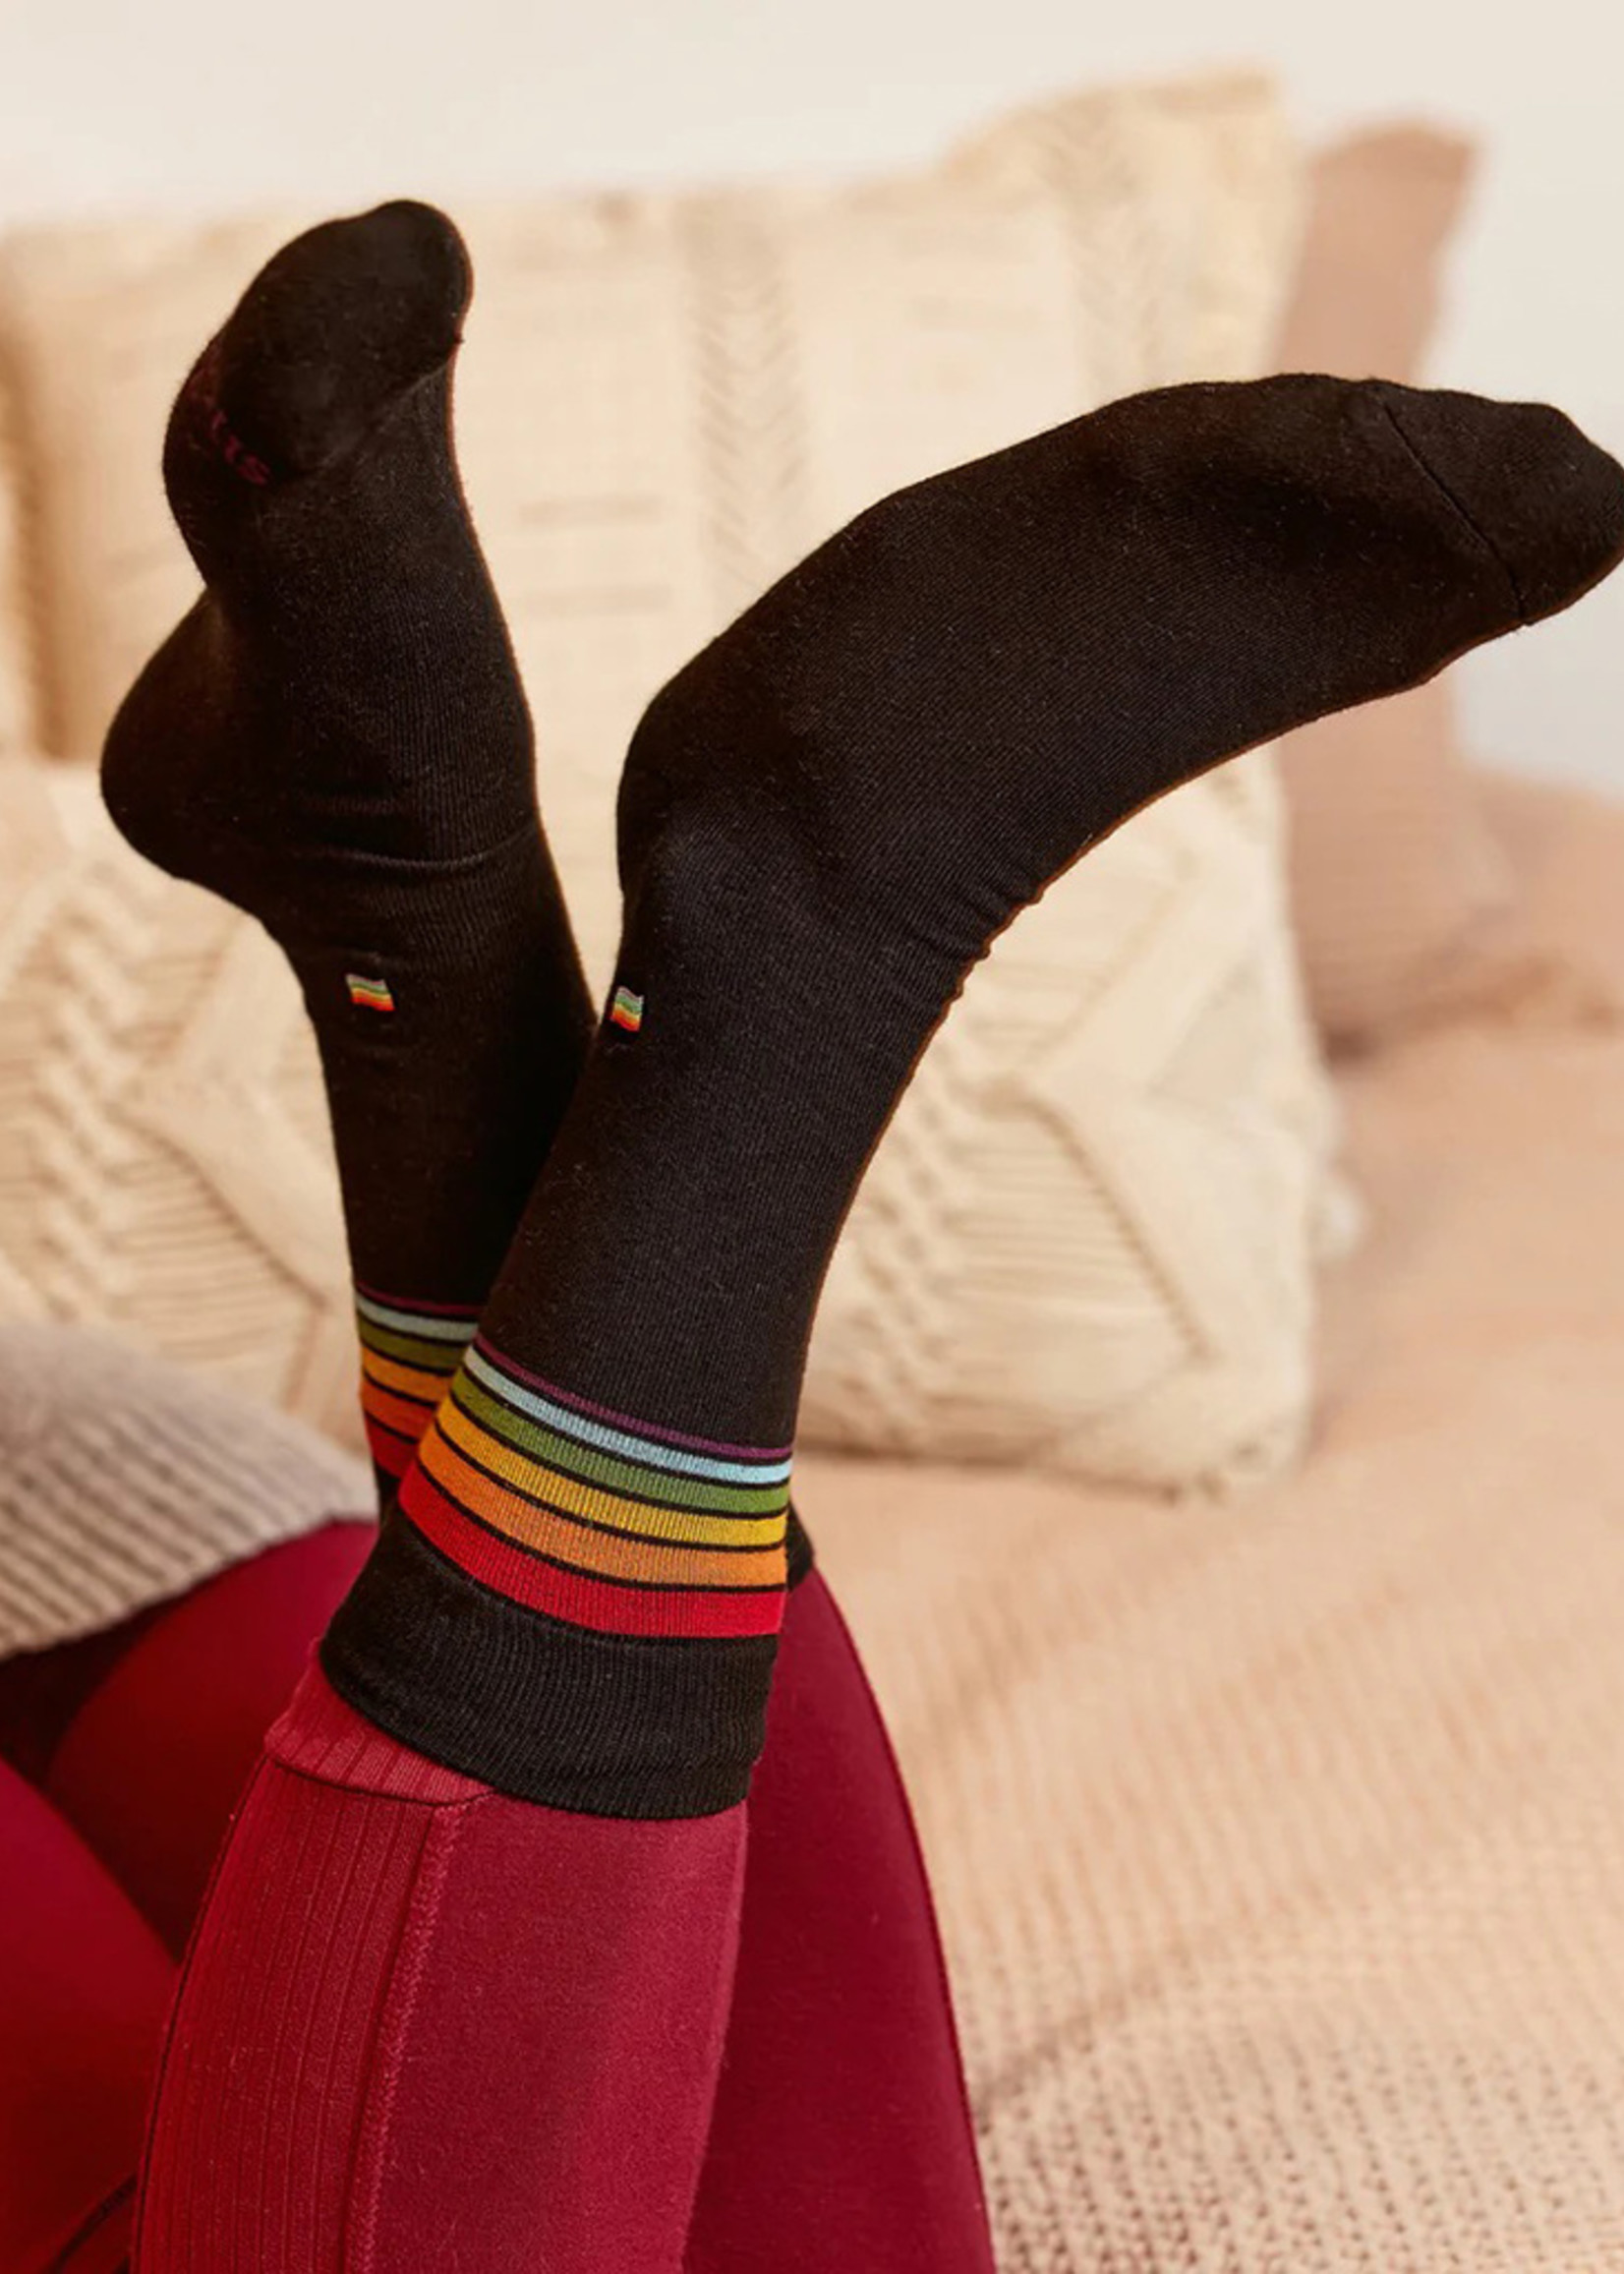 Conscious Step Men's Socks That Save LGBTQ Lives [Black]